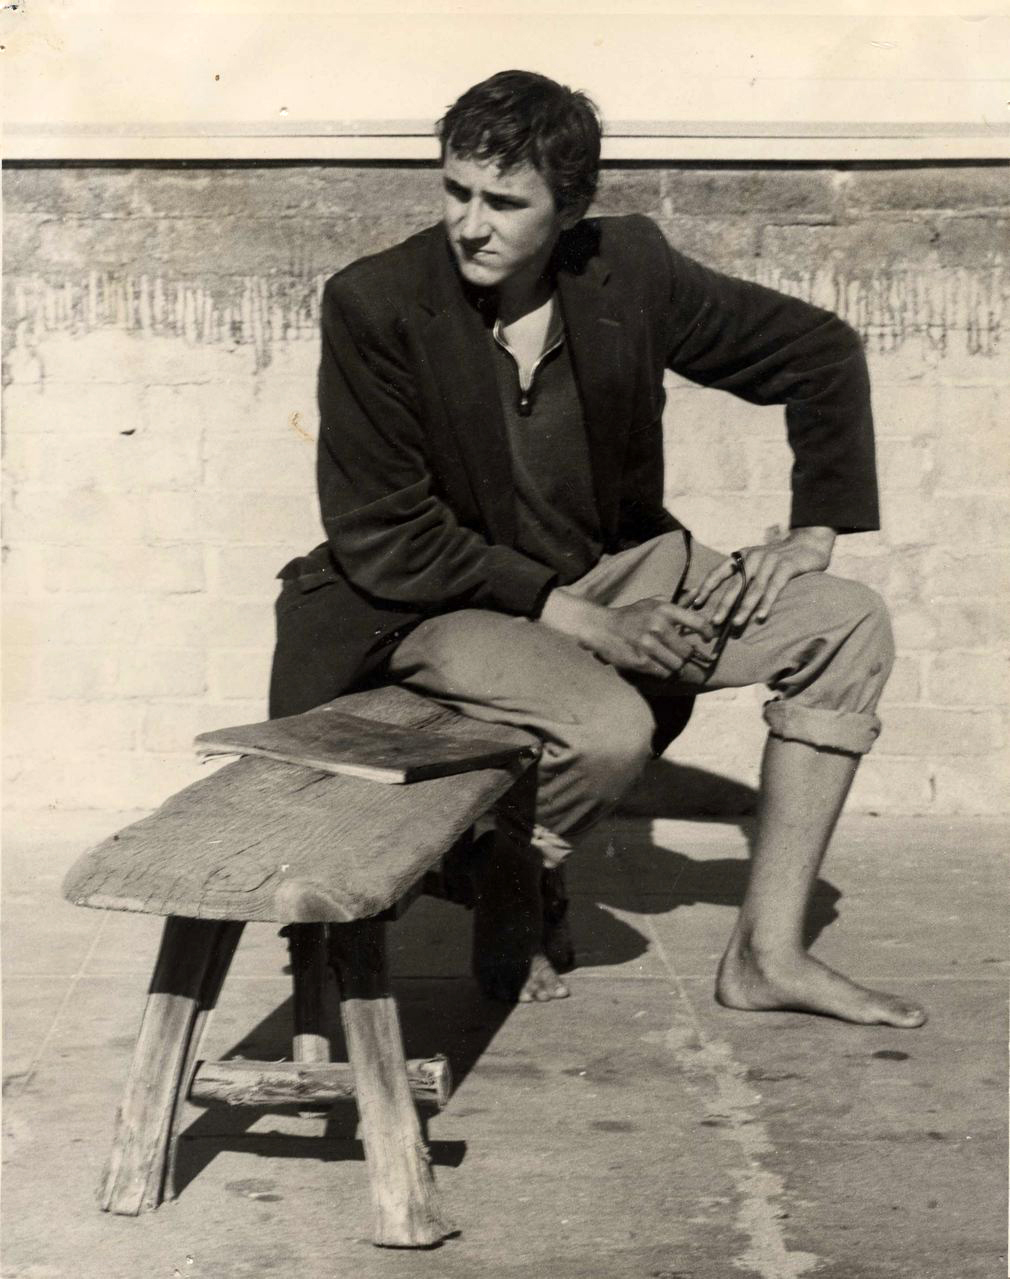 The artist in Venice Beach, CA circa 1961